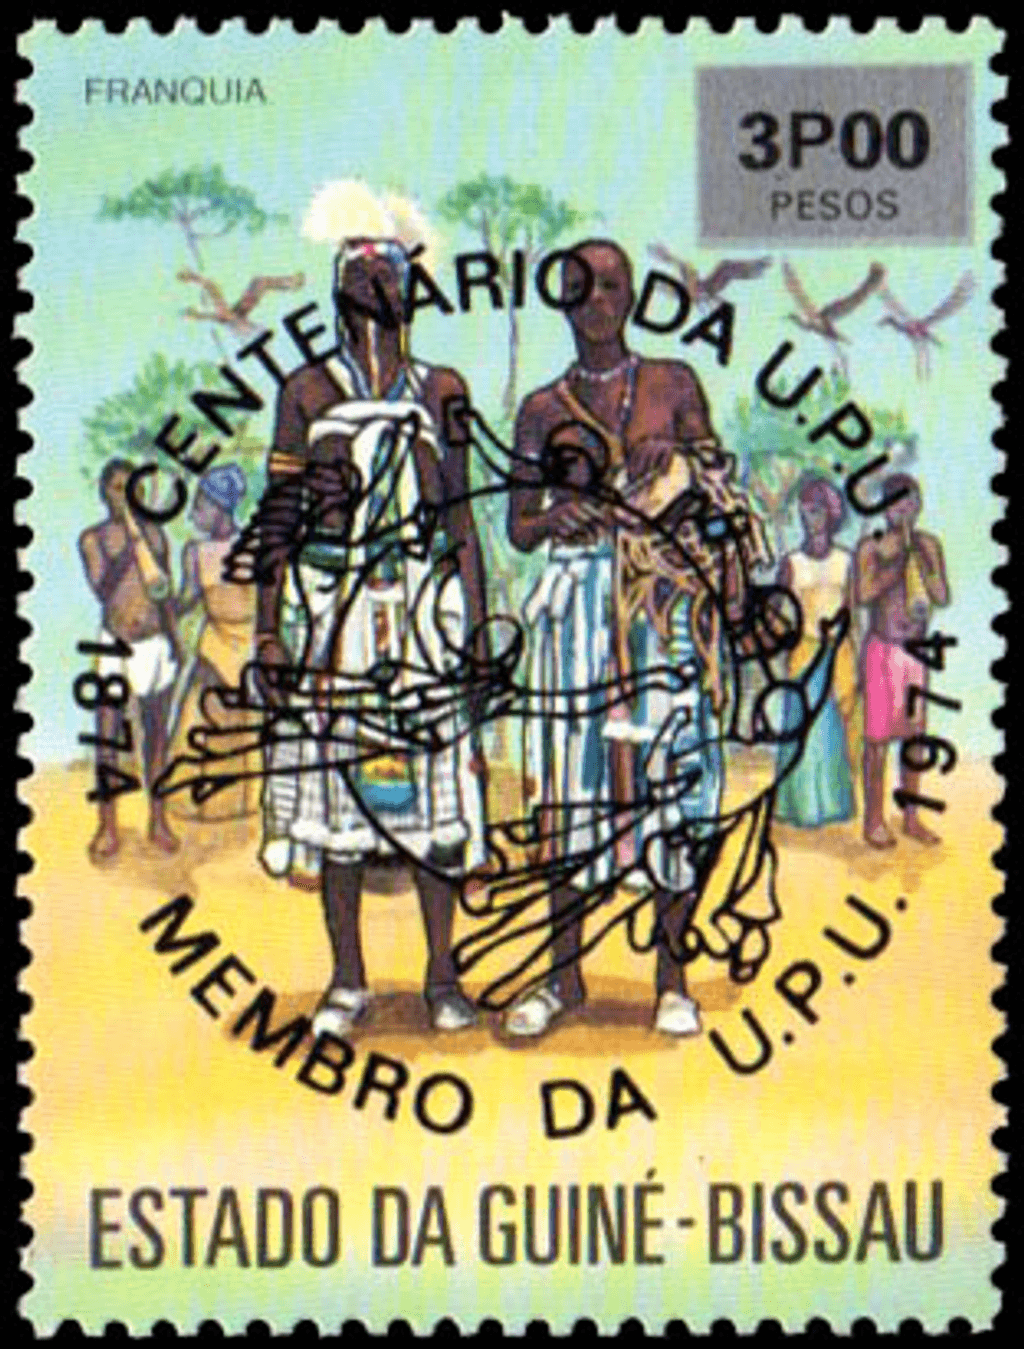 100th anniversary of the U.P.U., Reception of Guinea-Bissau in the World Postal Union 1874-1974 - Black imprint  1976